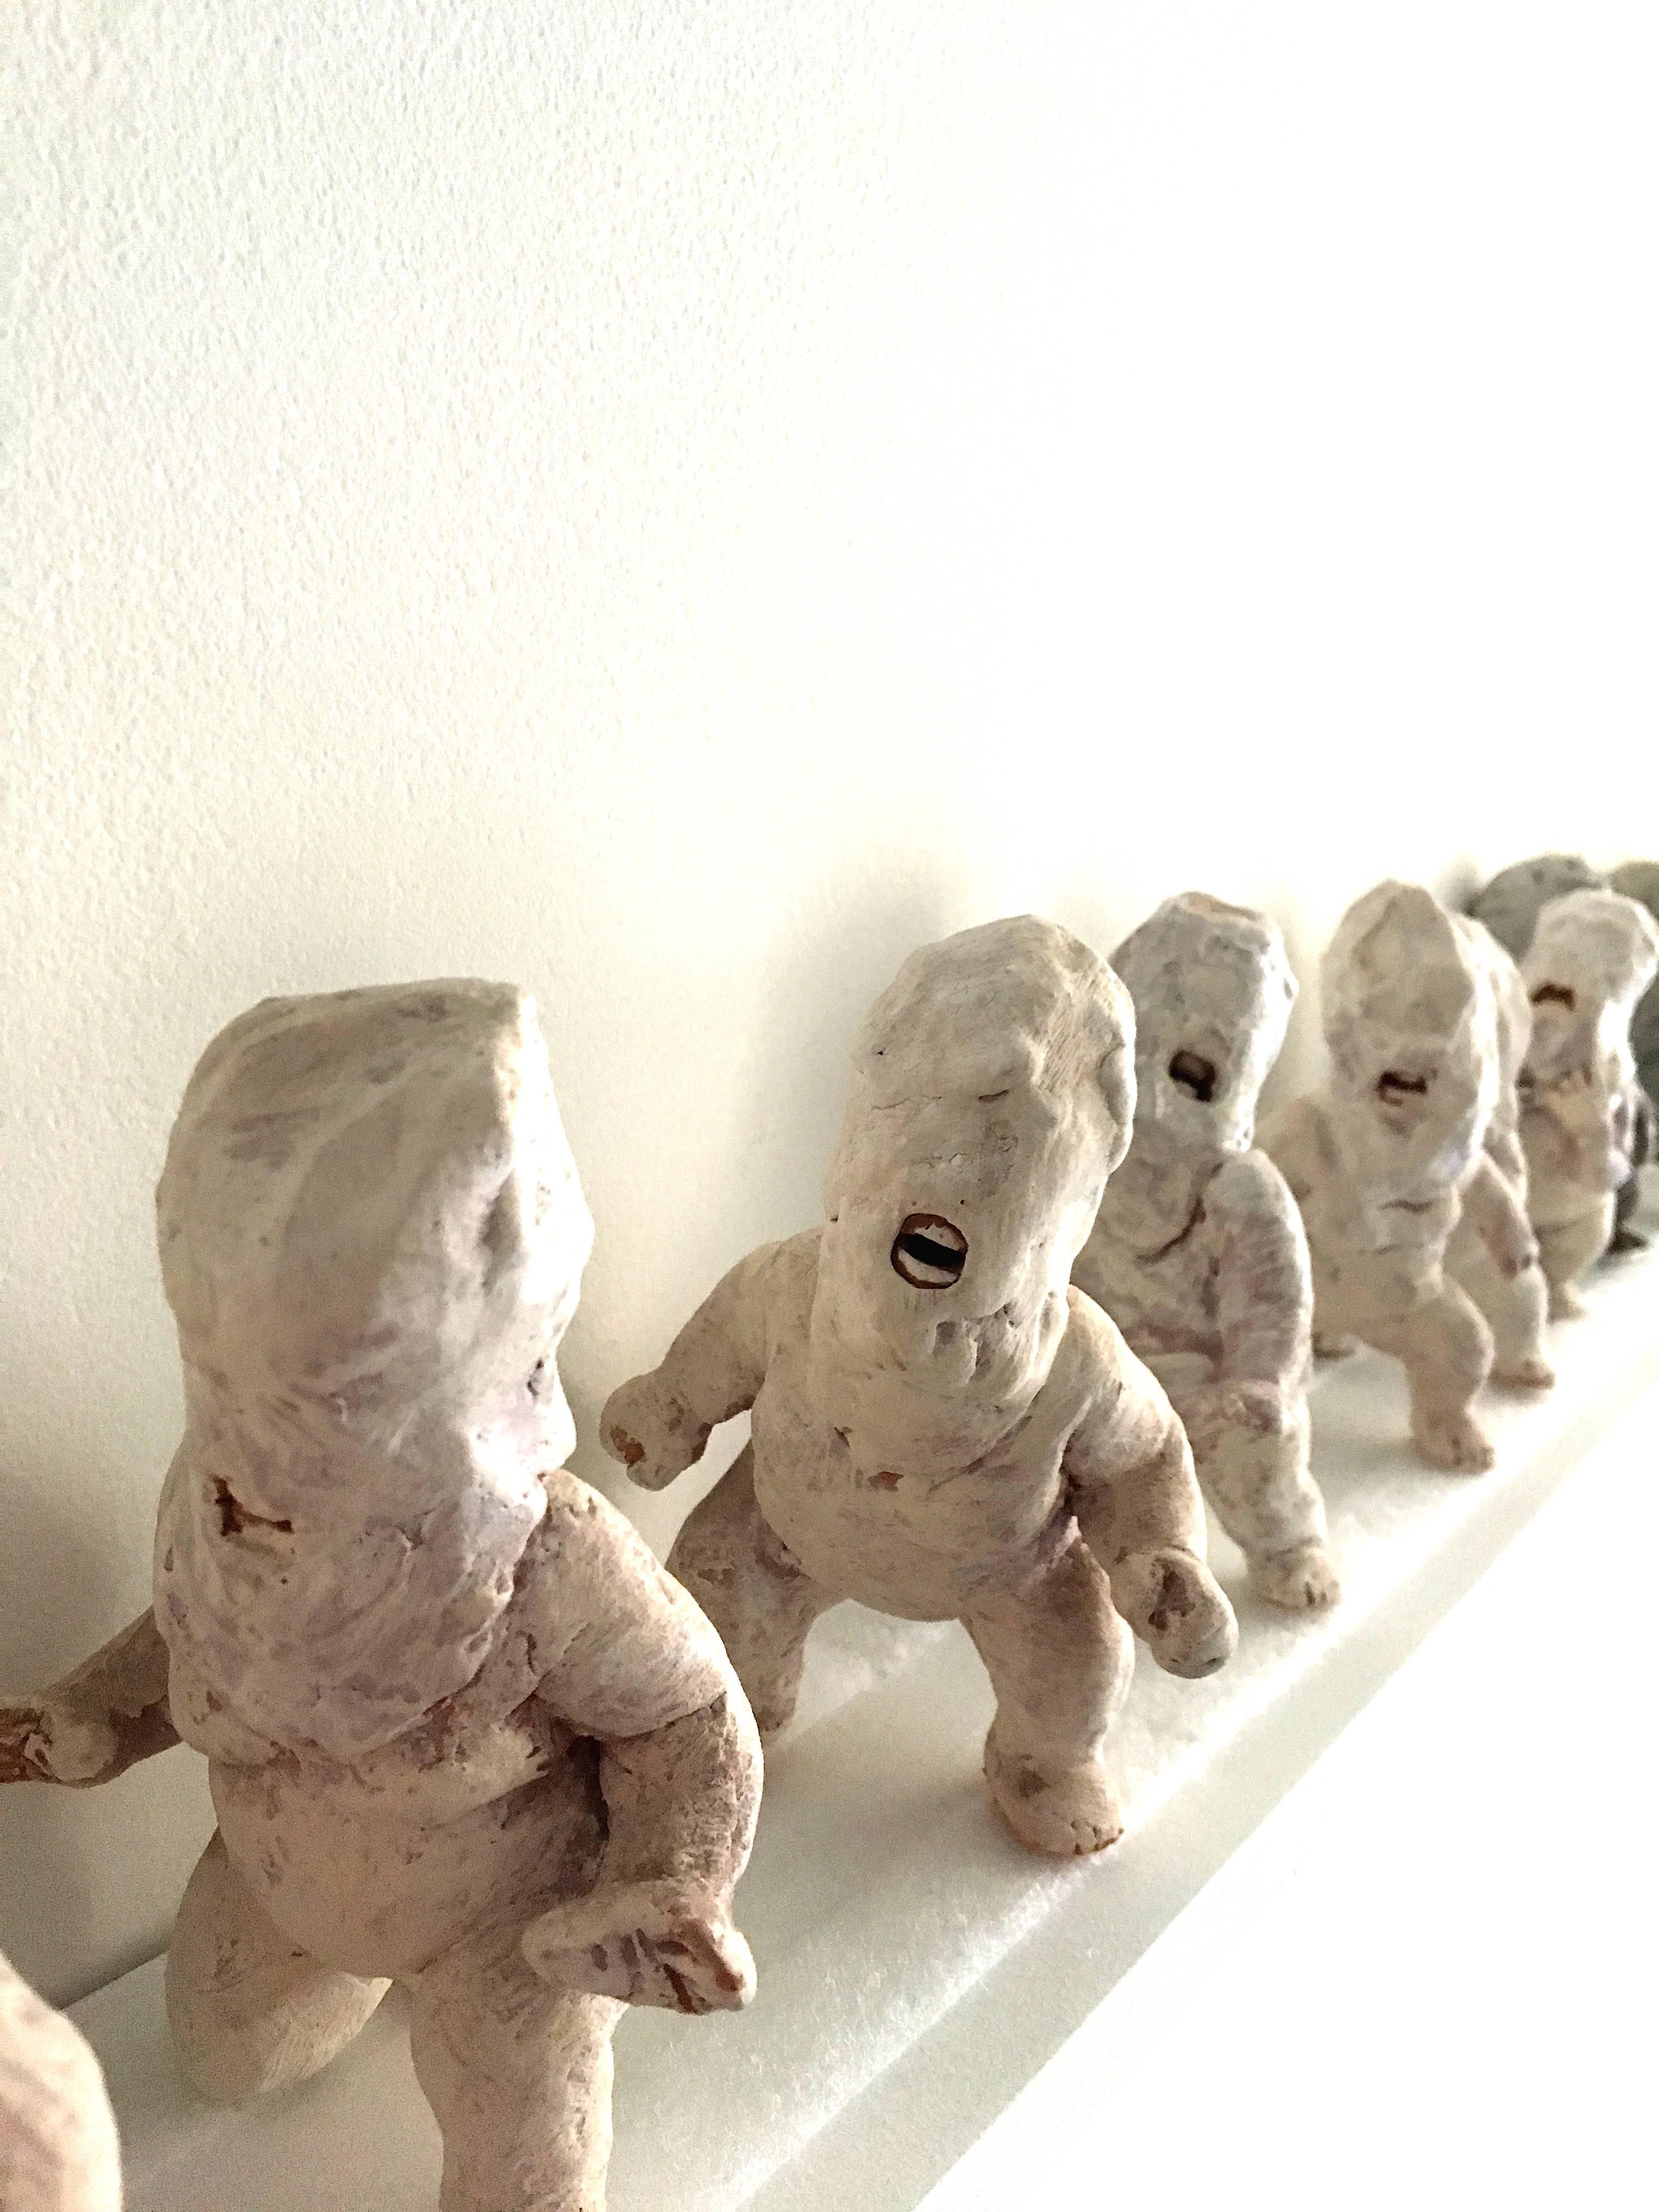 Kenjiro Kitade Nude Sculpture - Enfant Terrible